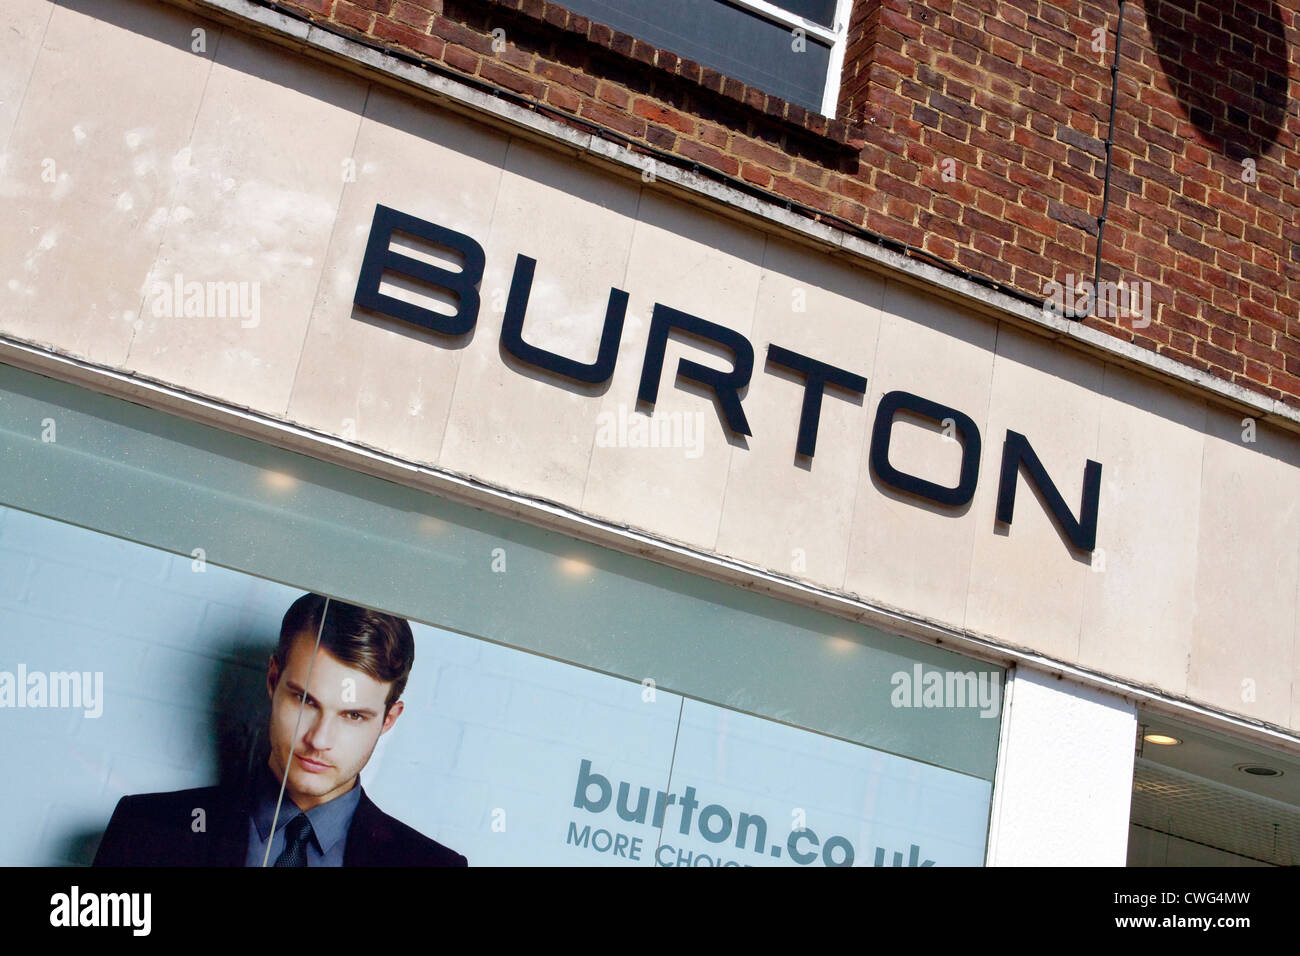 Burton Mens Clothes Shop Store Stock Photo